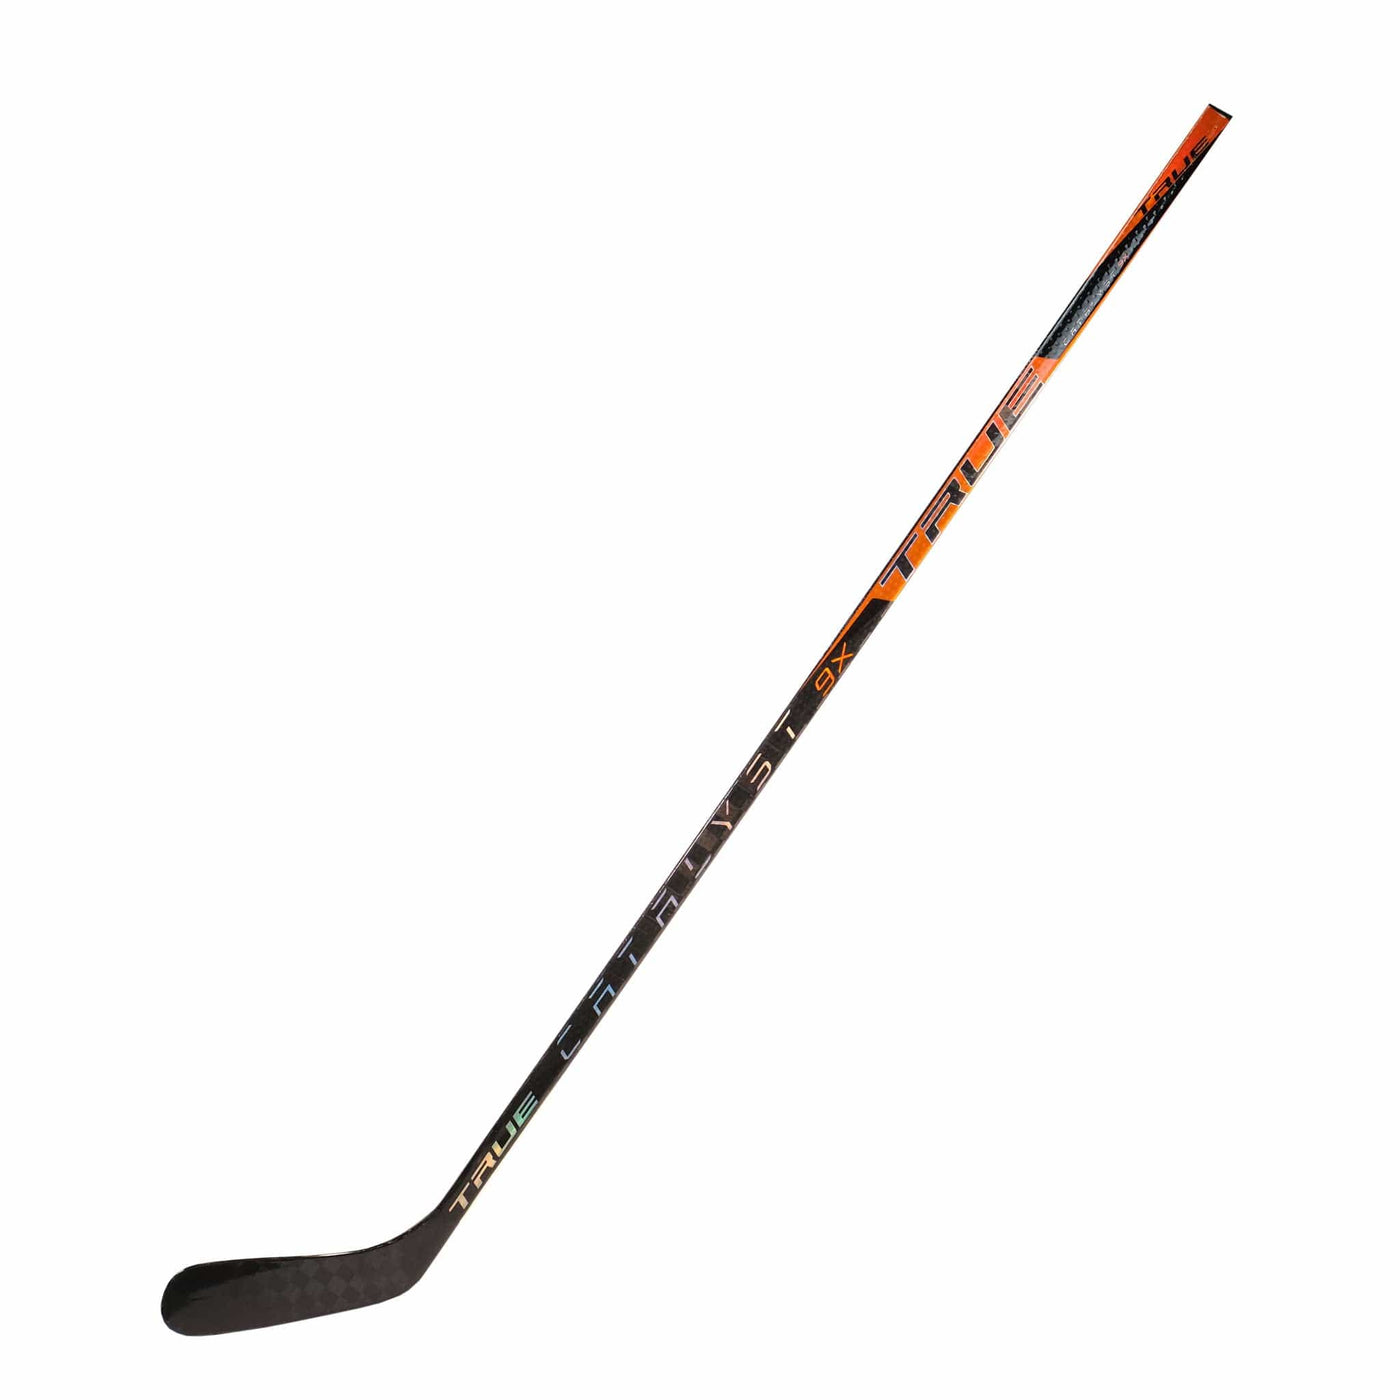 TRUE Catalyst 9X Pro Stock Senior Hockey Stick - Elias Lindholm - TC2 - R-70 - The Hockey Shop Source For Sports